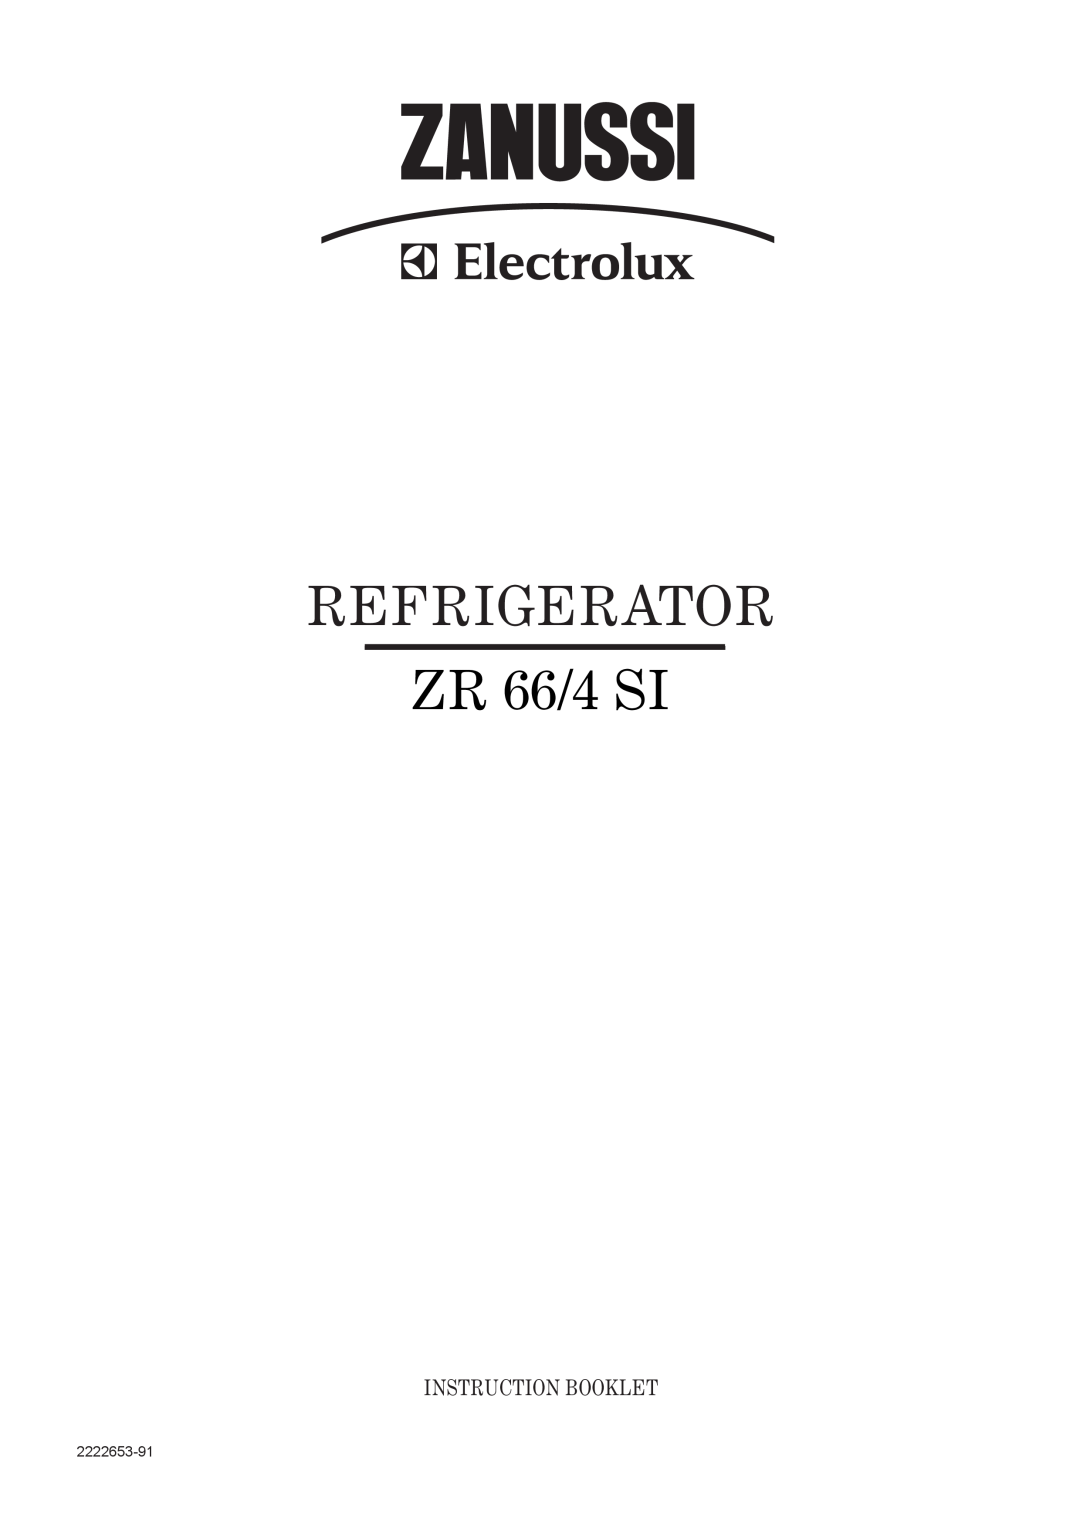 Zanussi ZR 66/4 SI manual Refrigerator, Instruction Booklet, 2222653-91 